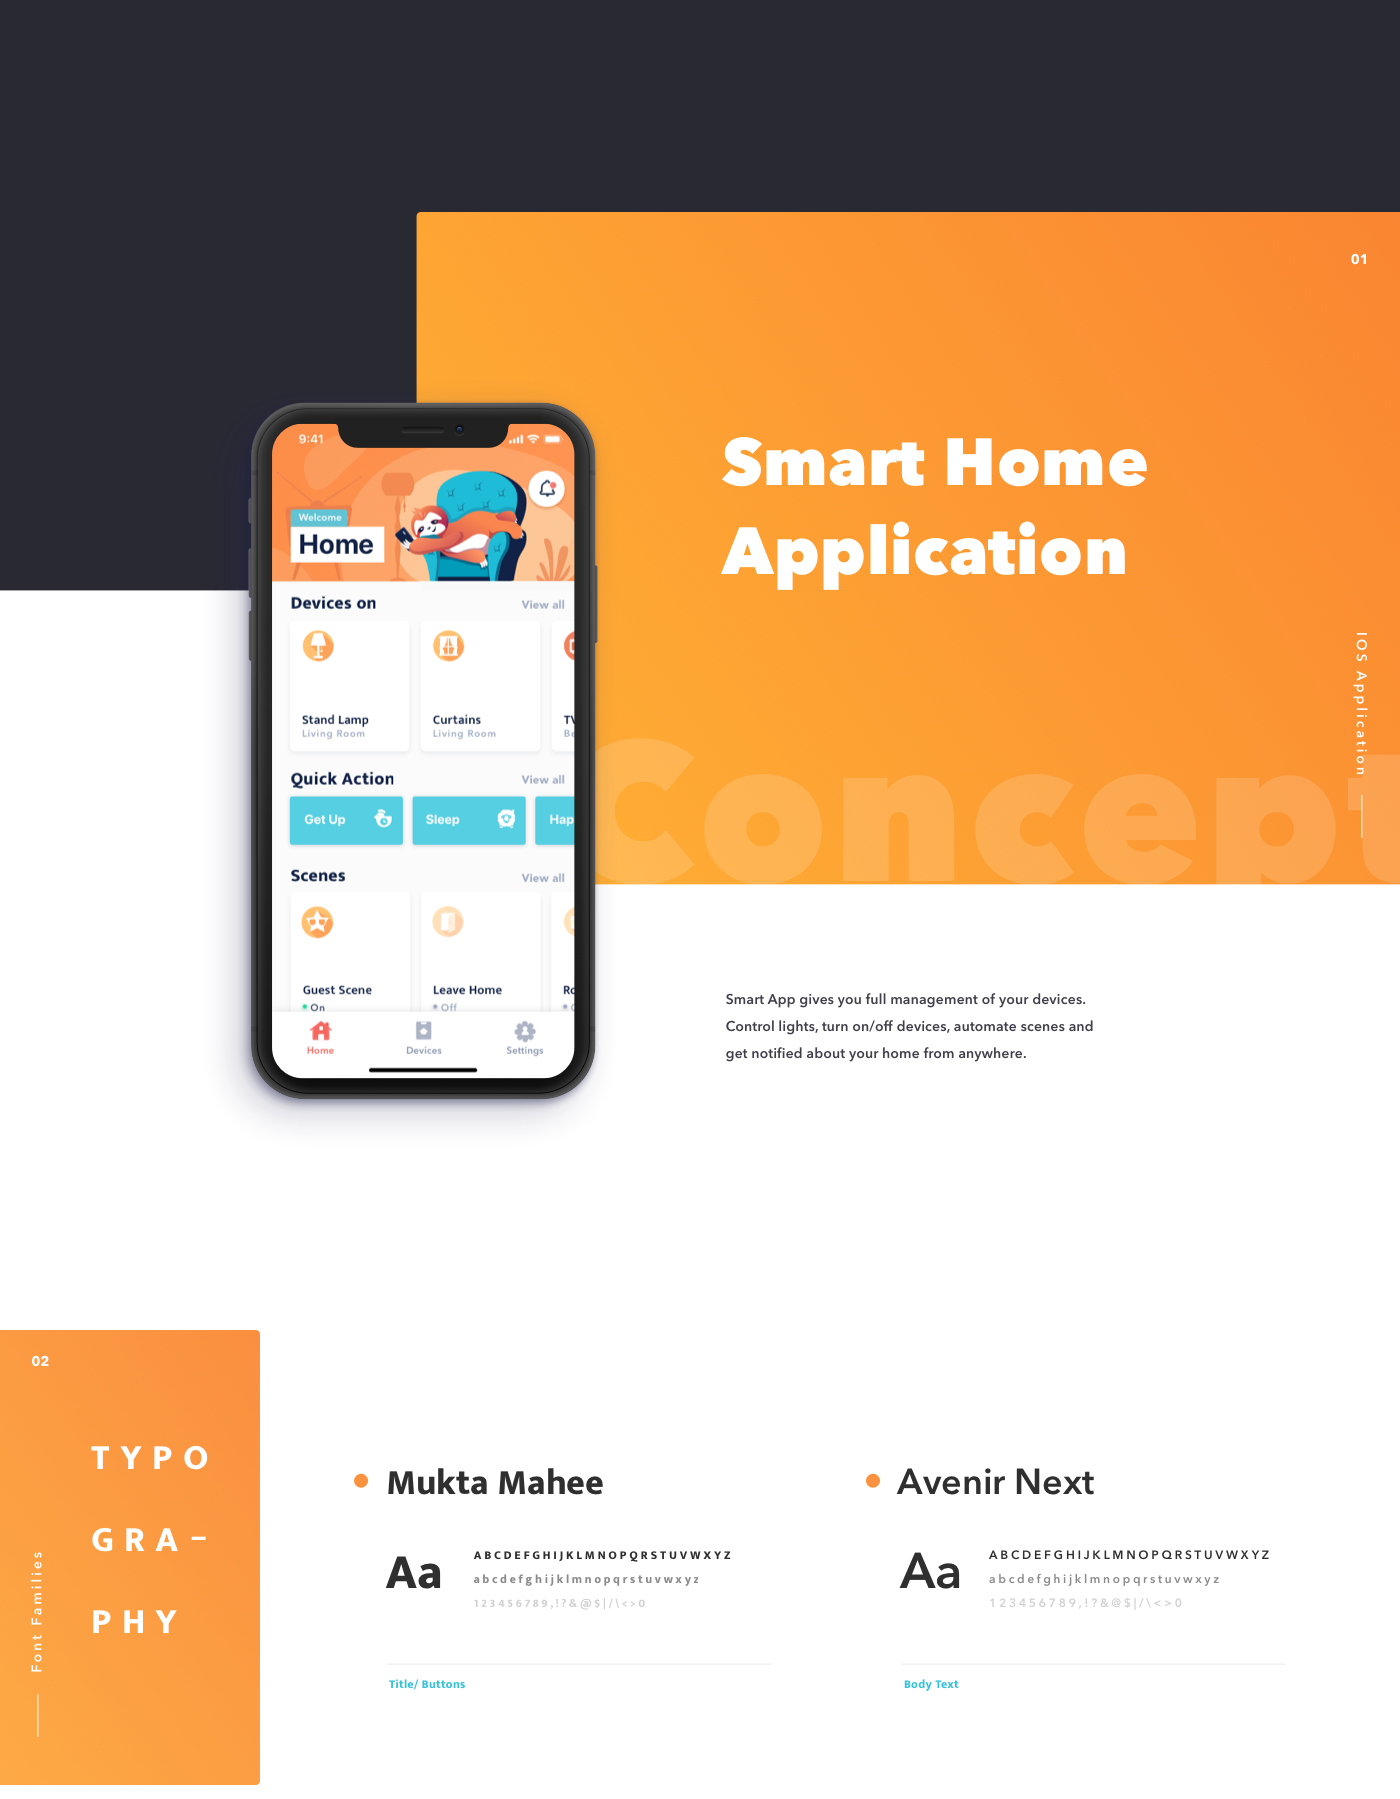 Dark mode screenss idea #223: Smart Home App - IOS